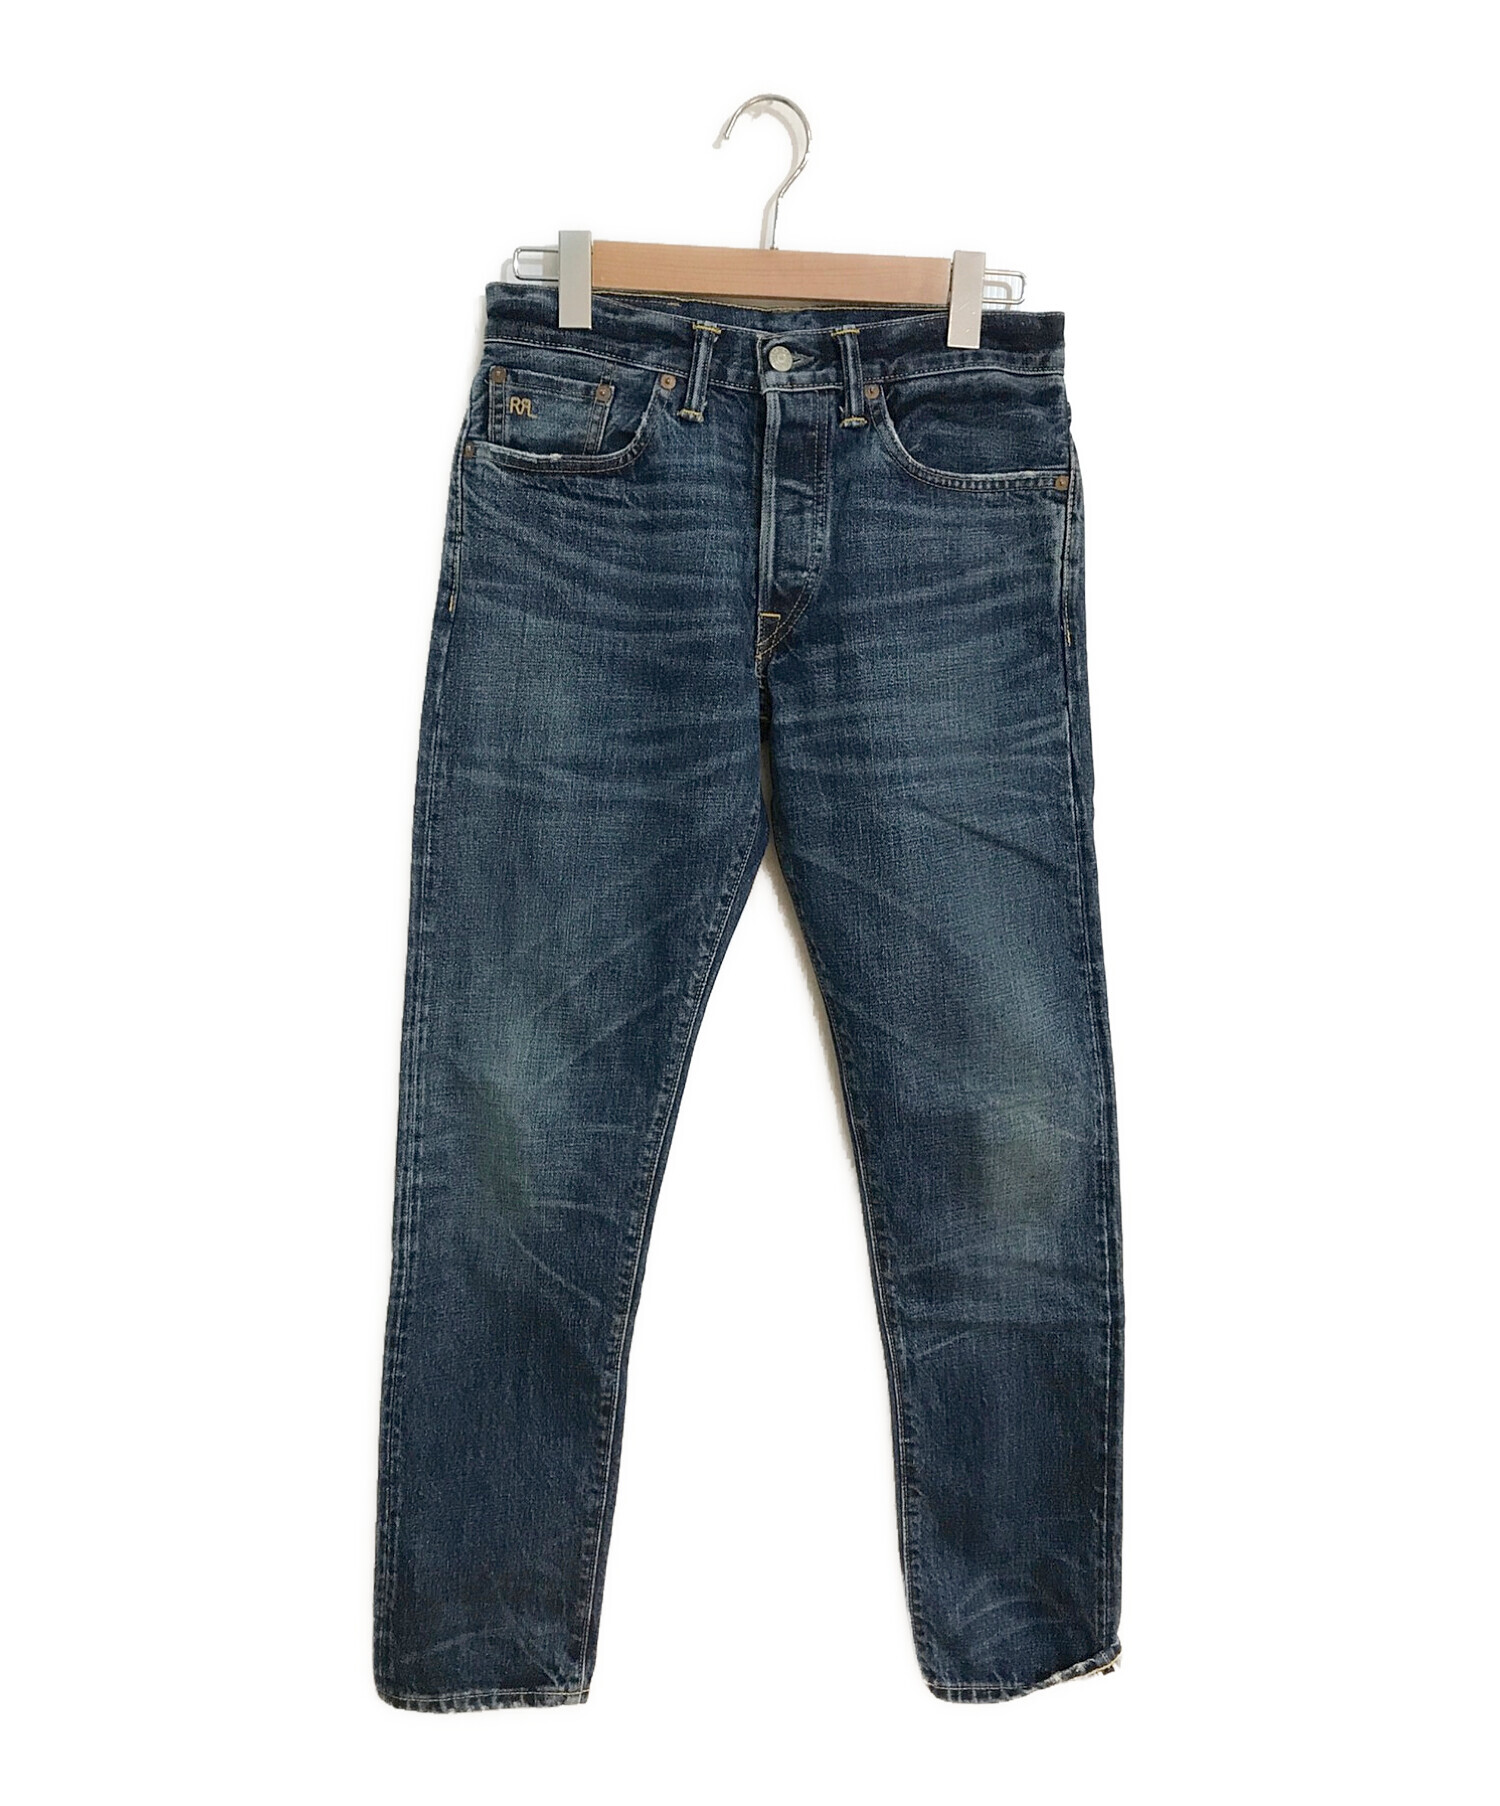 RRL slim fit jeans size 29